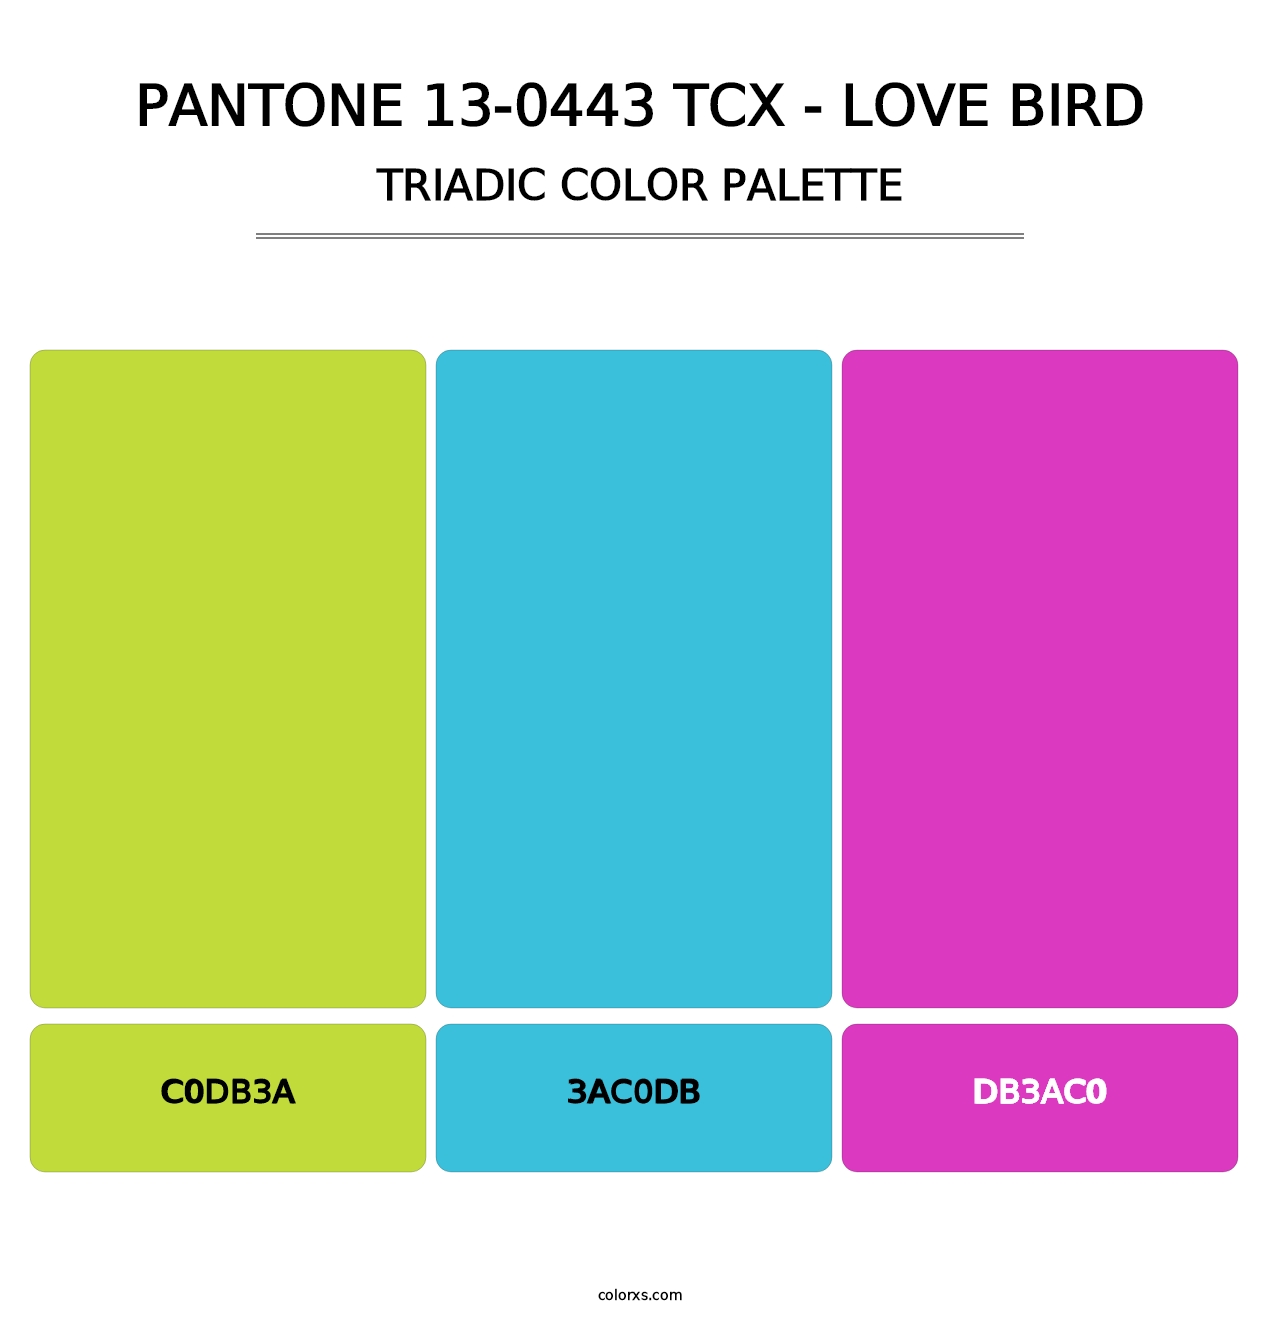 PANTONE 13-0443 TCX - Love Bird - Triadic Color Palette